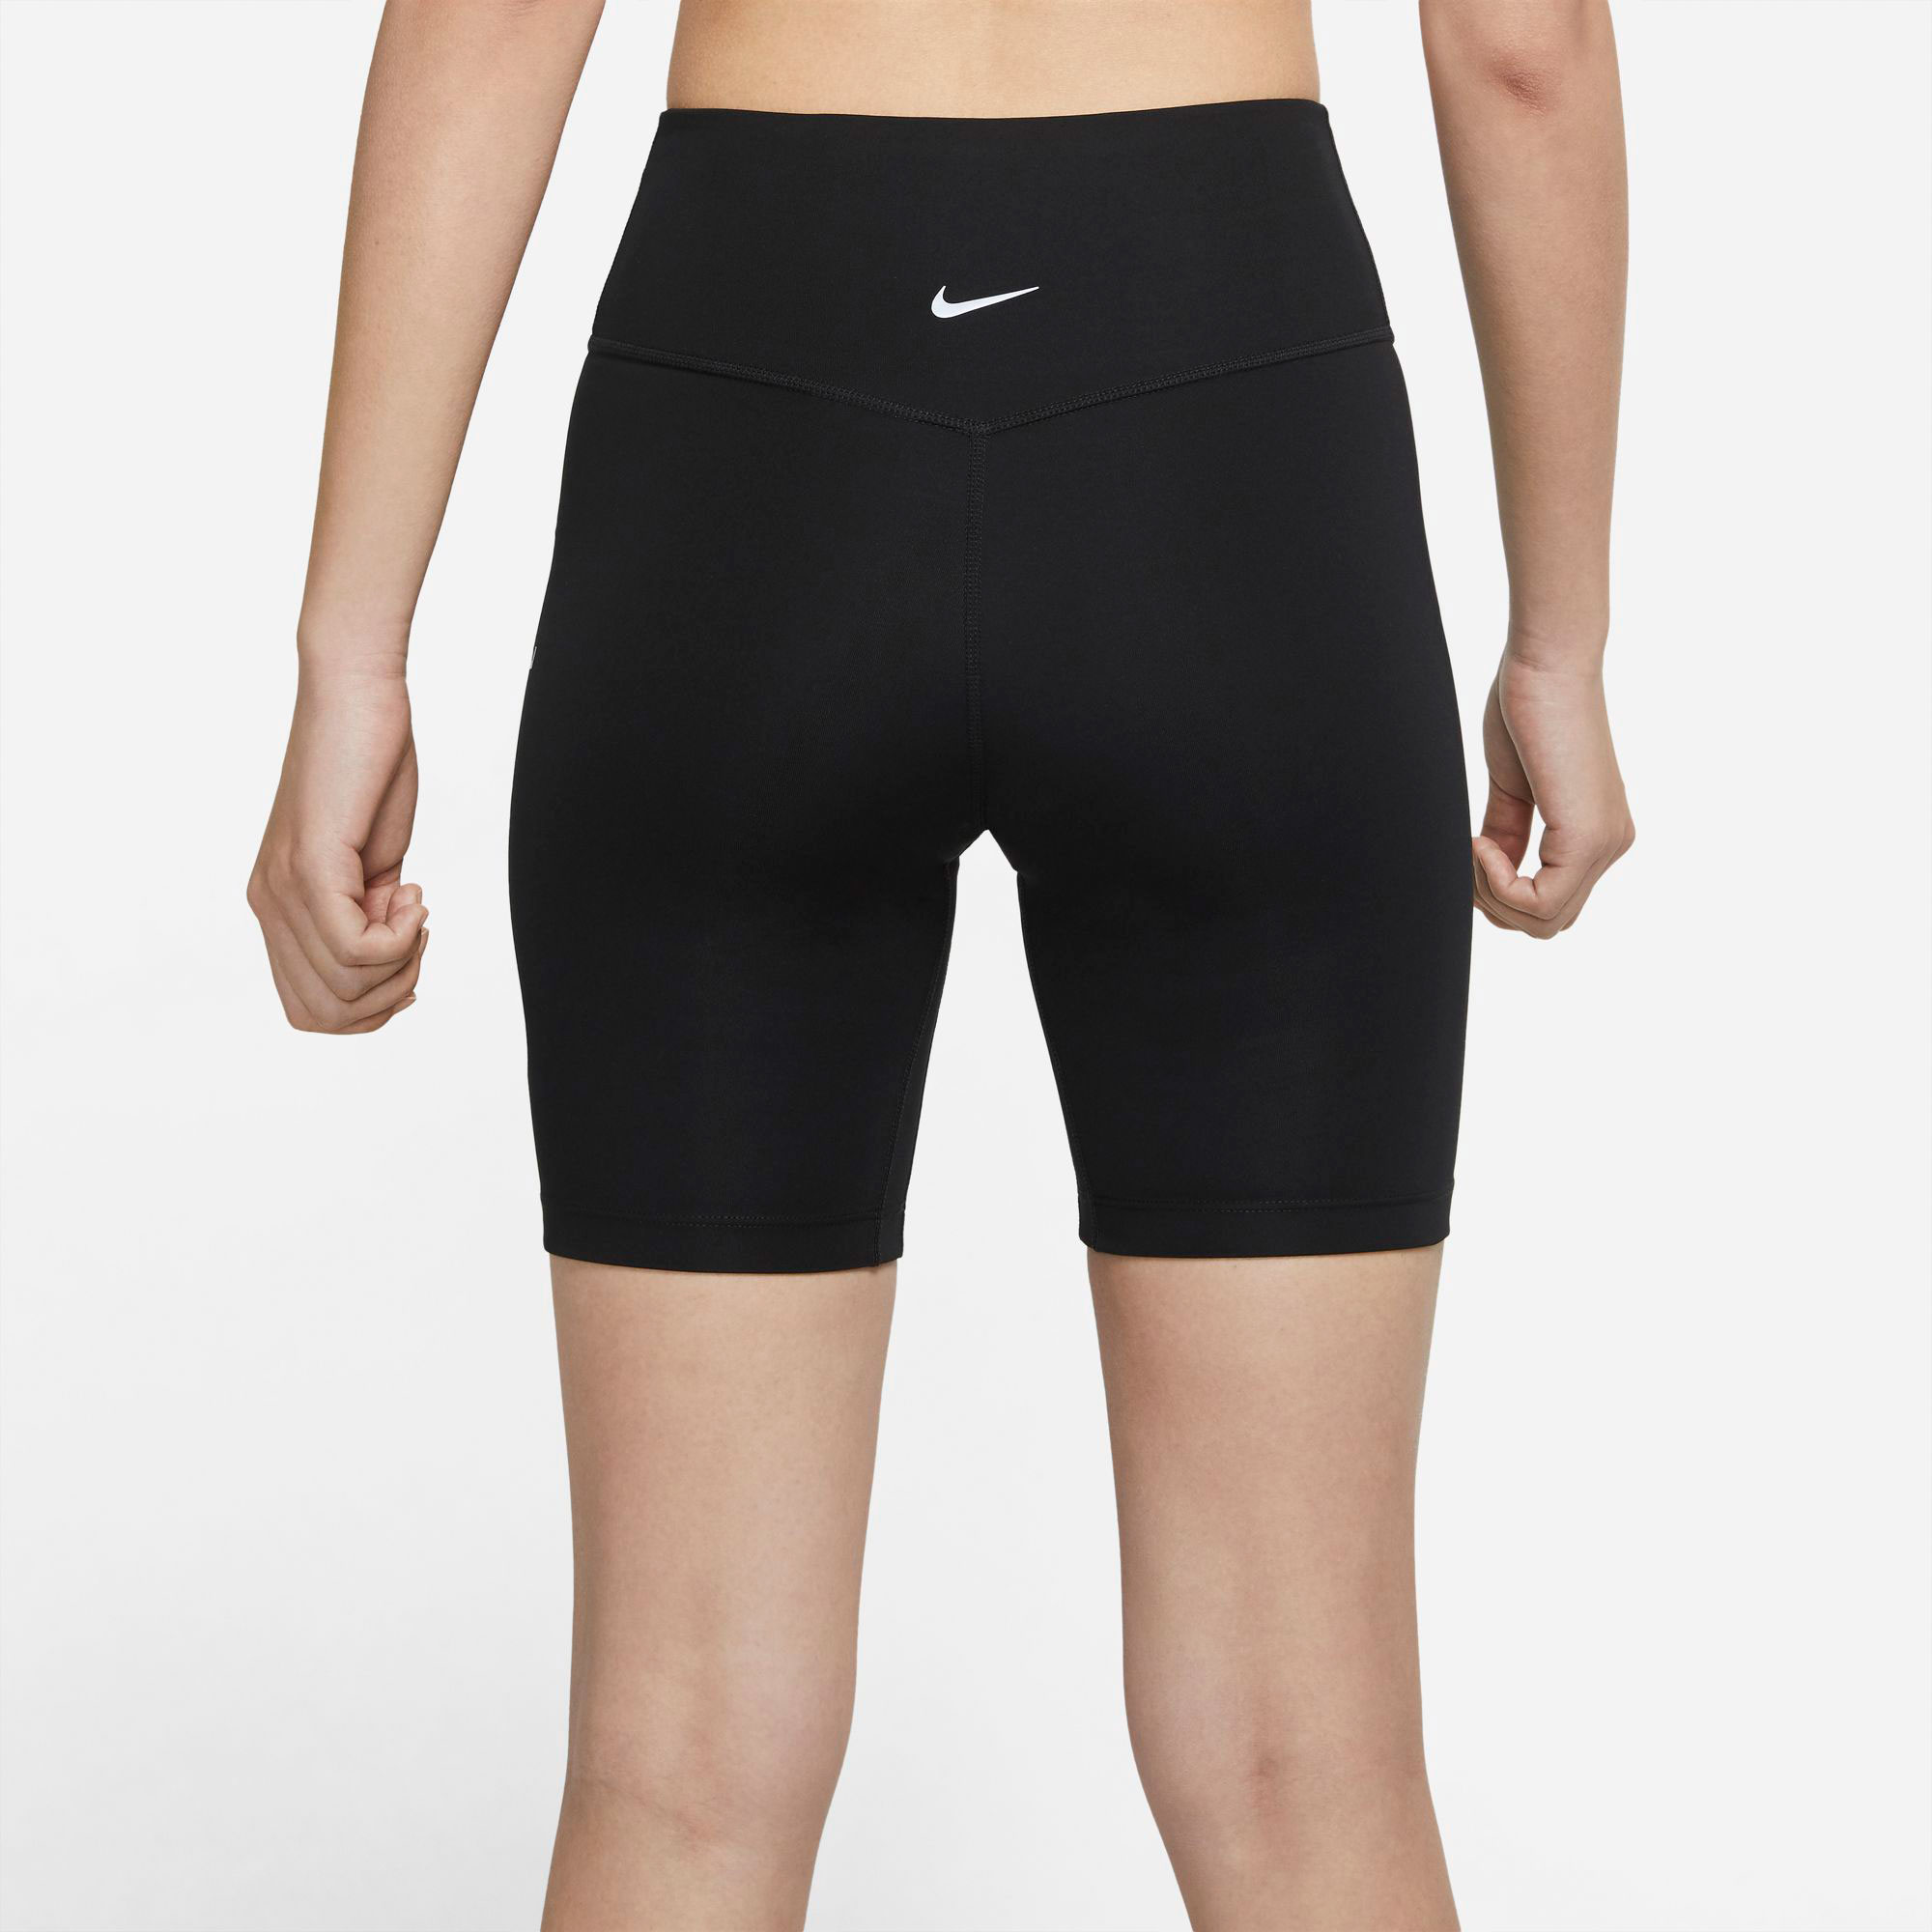 Women’s running shorts